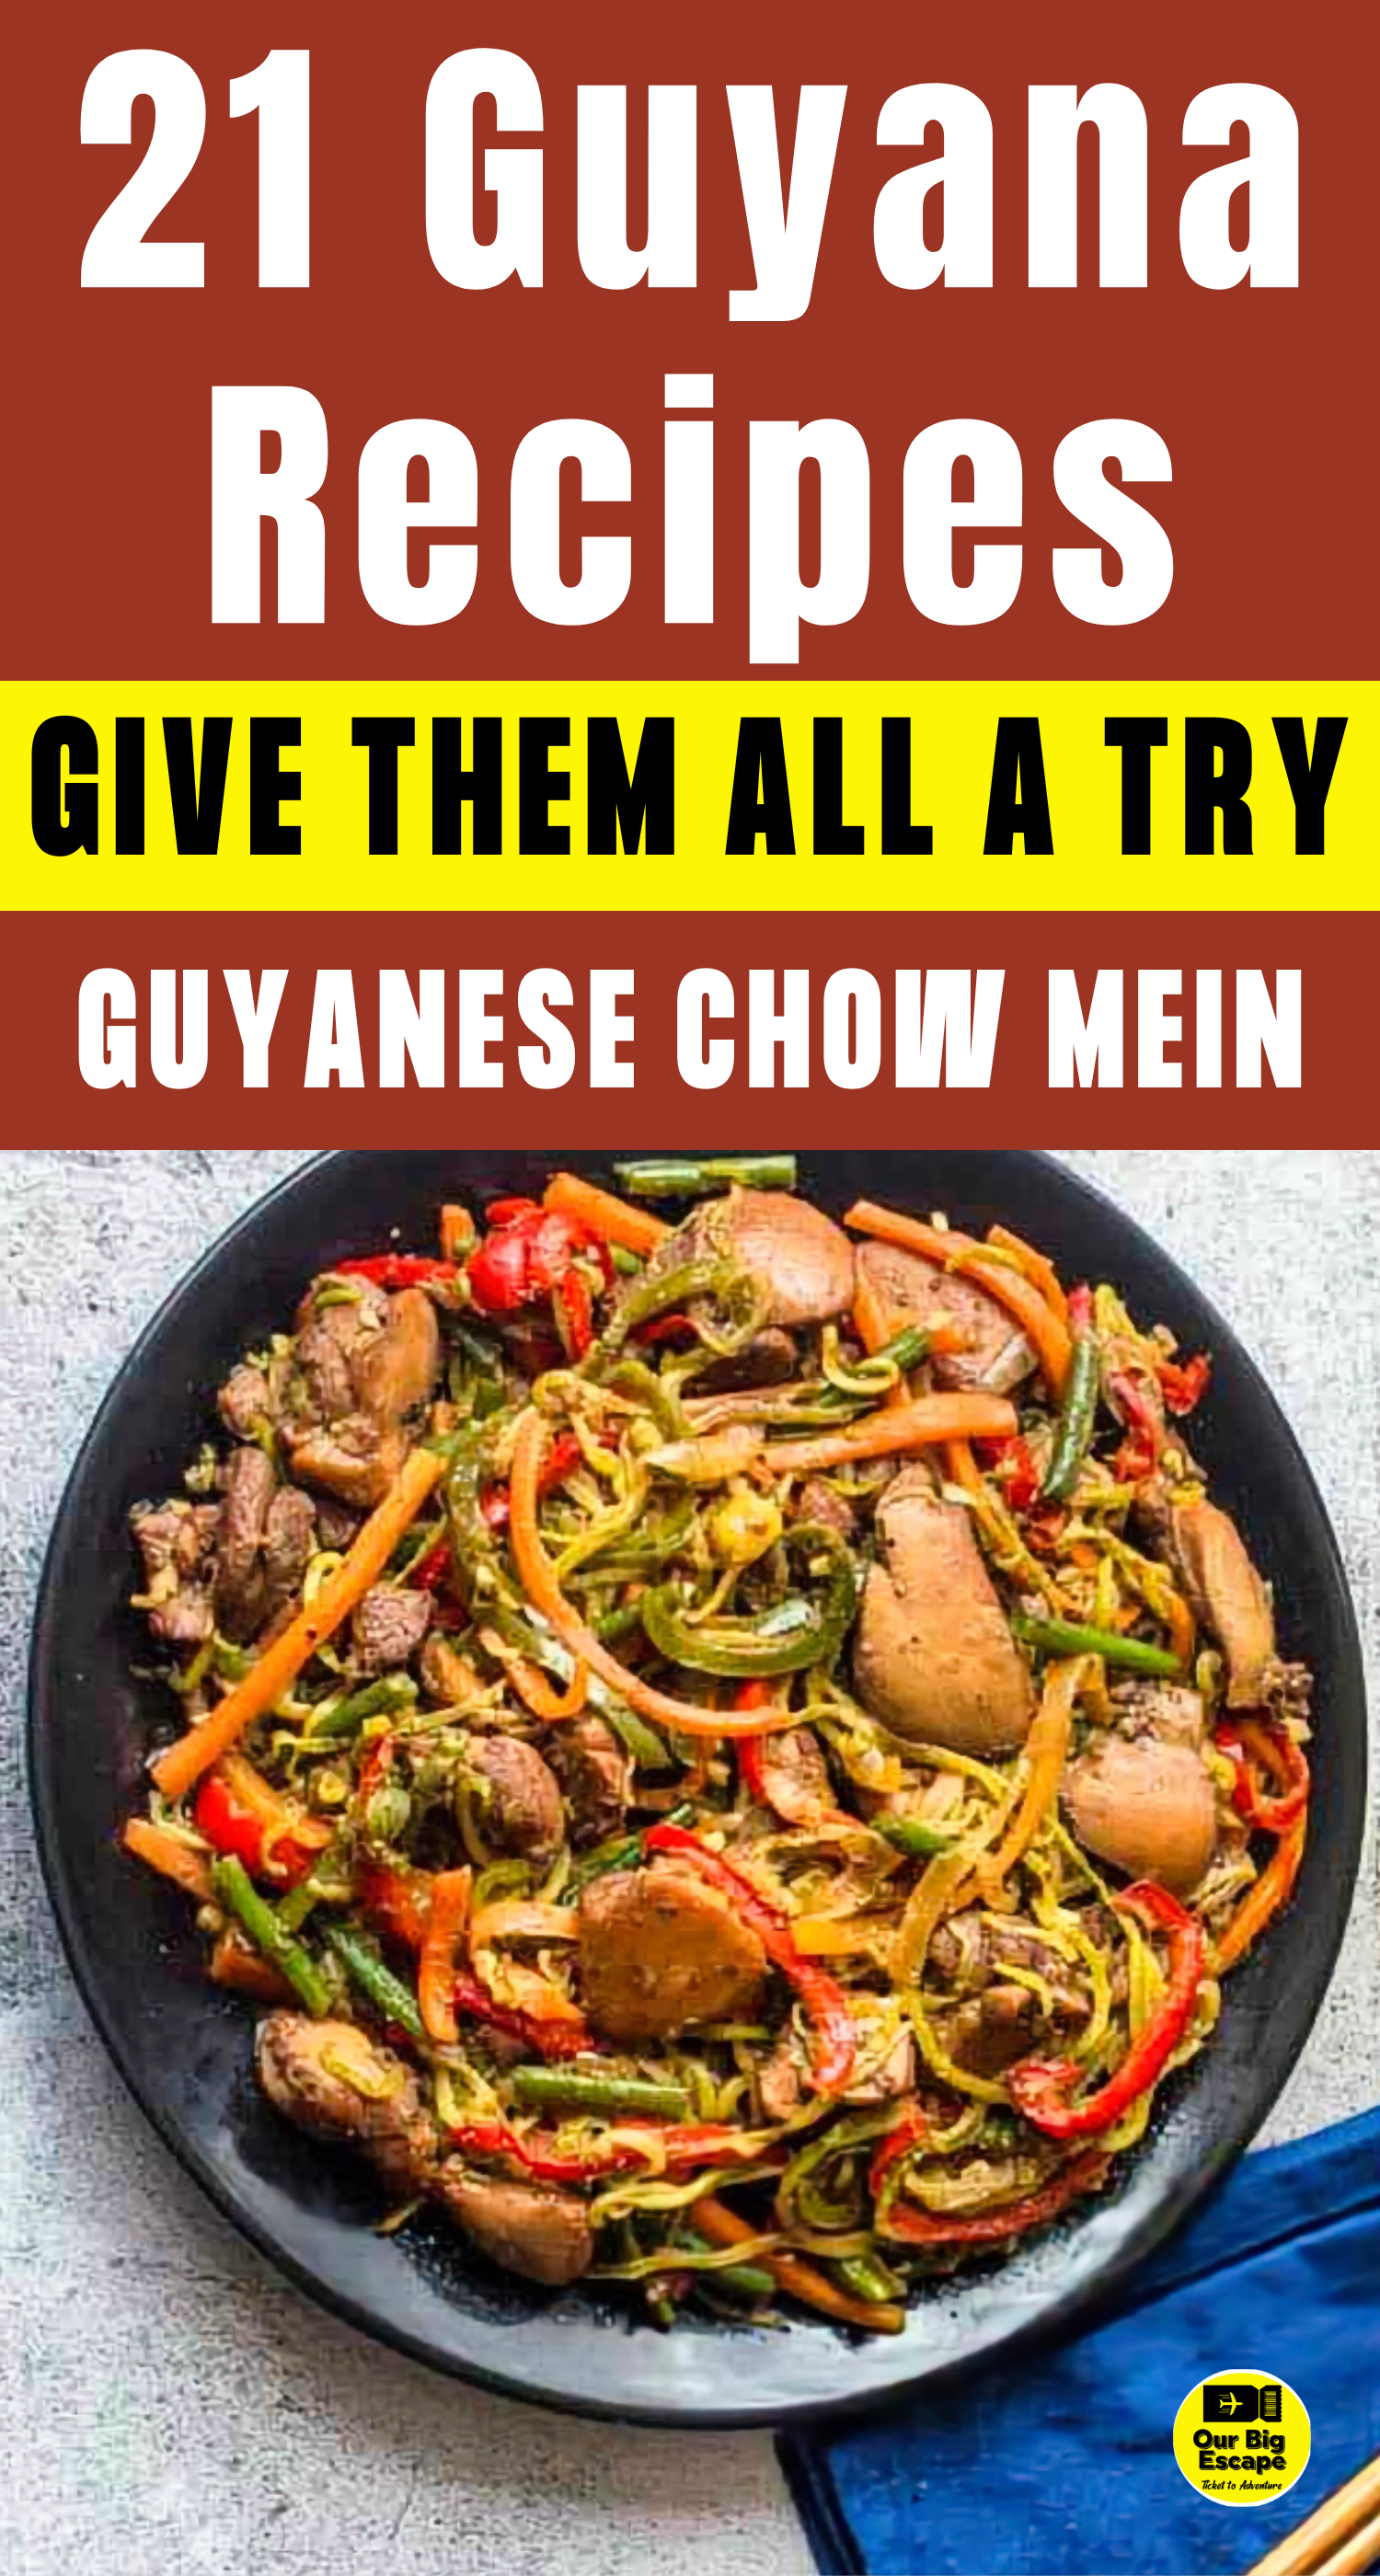 21 Guyana Recipes - Guyanese Chow Mein